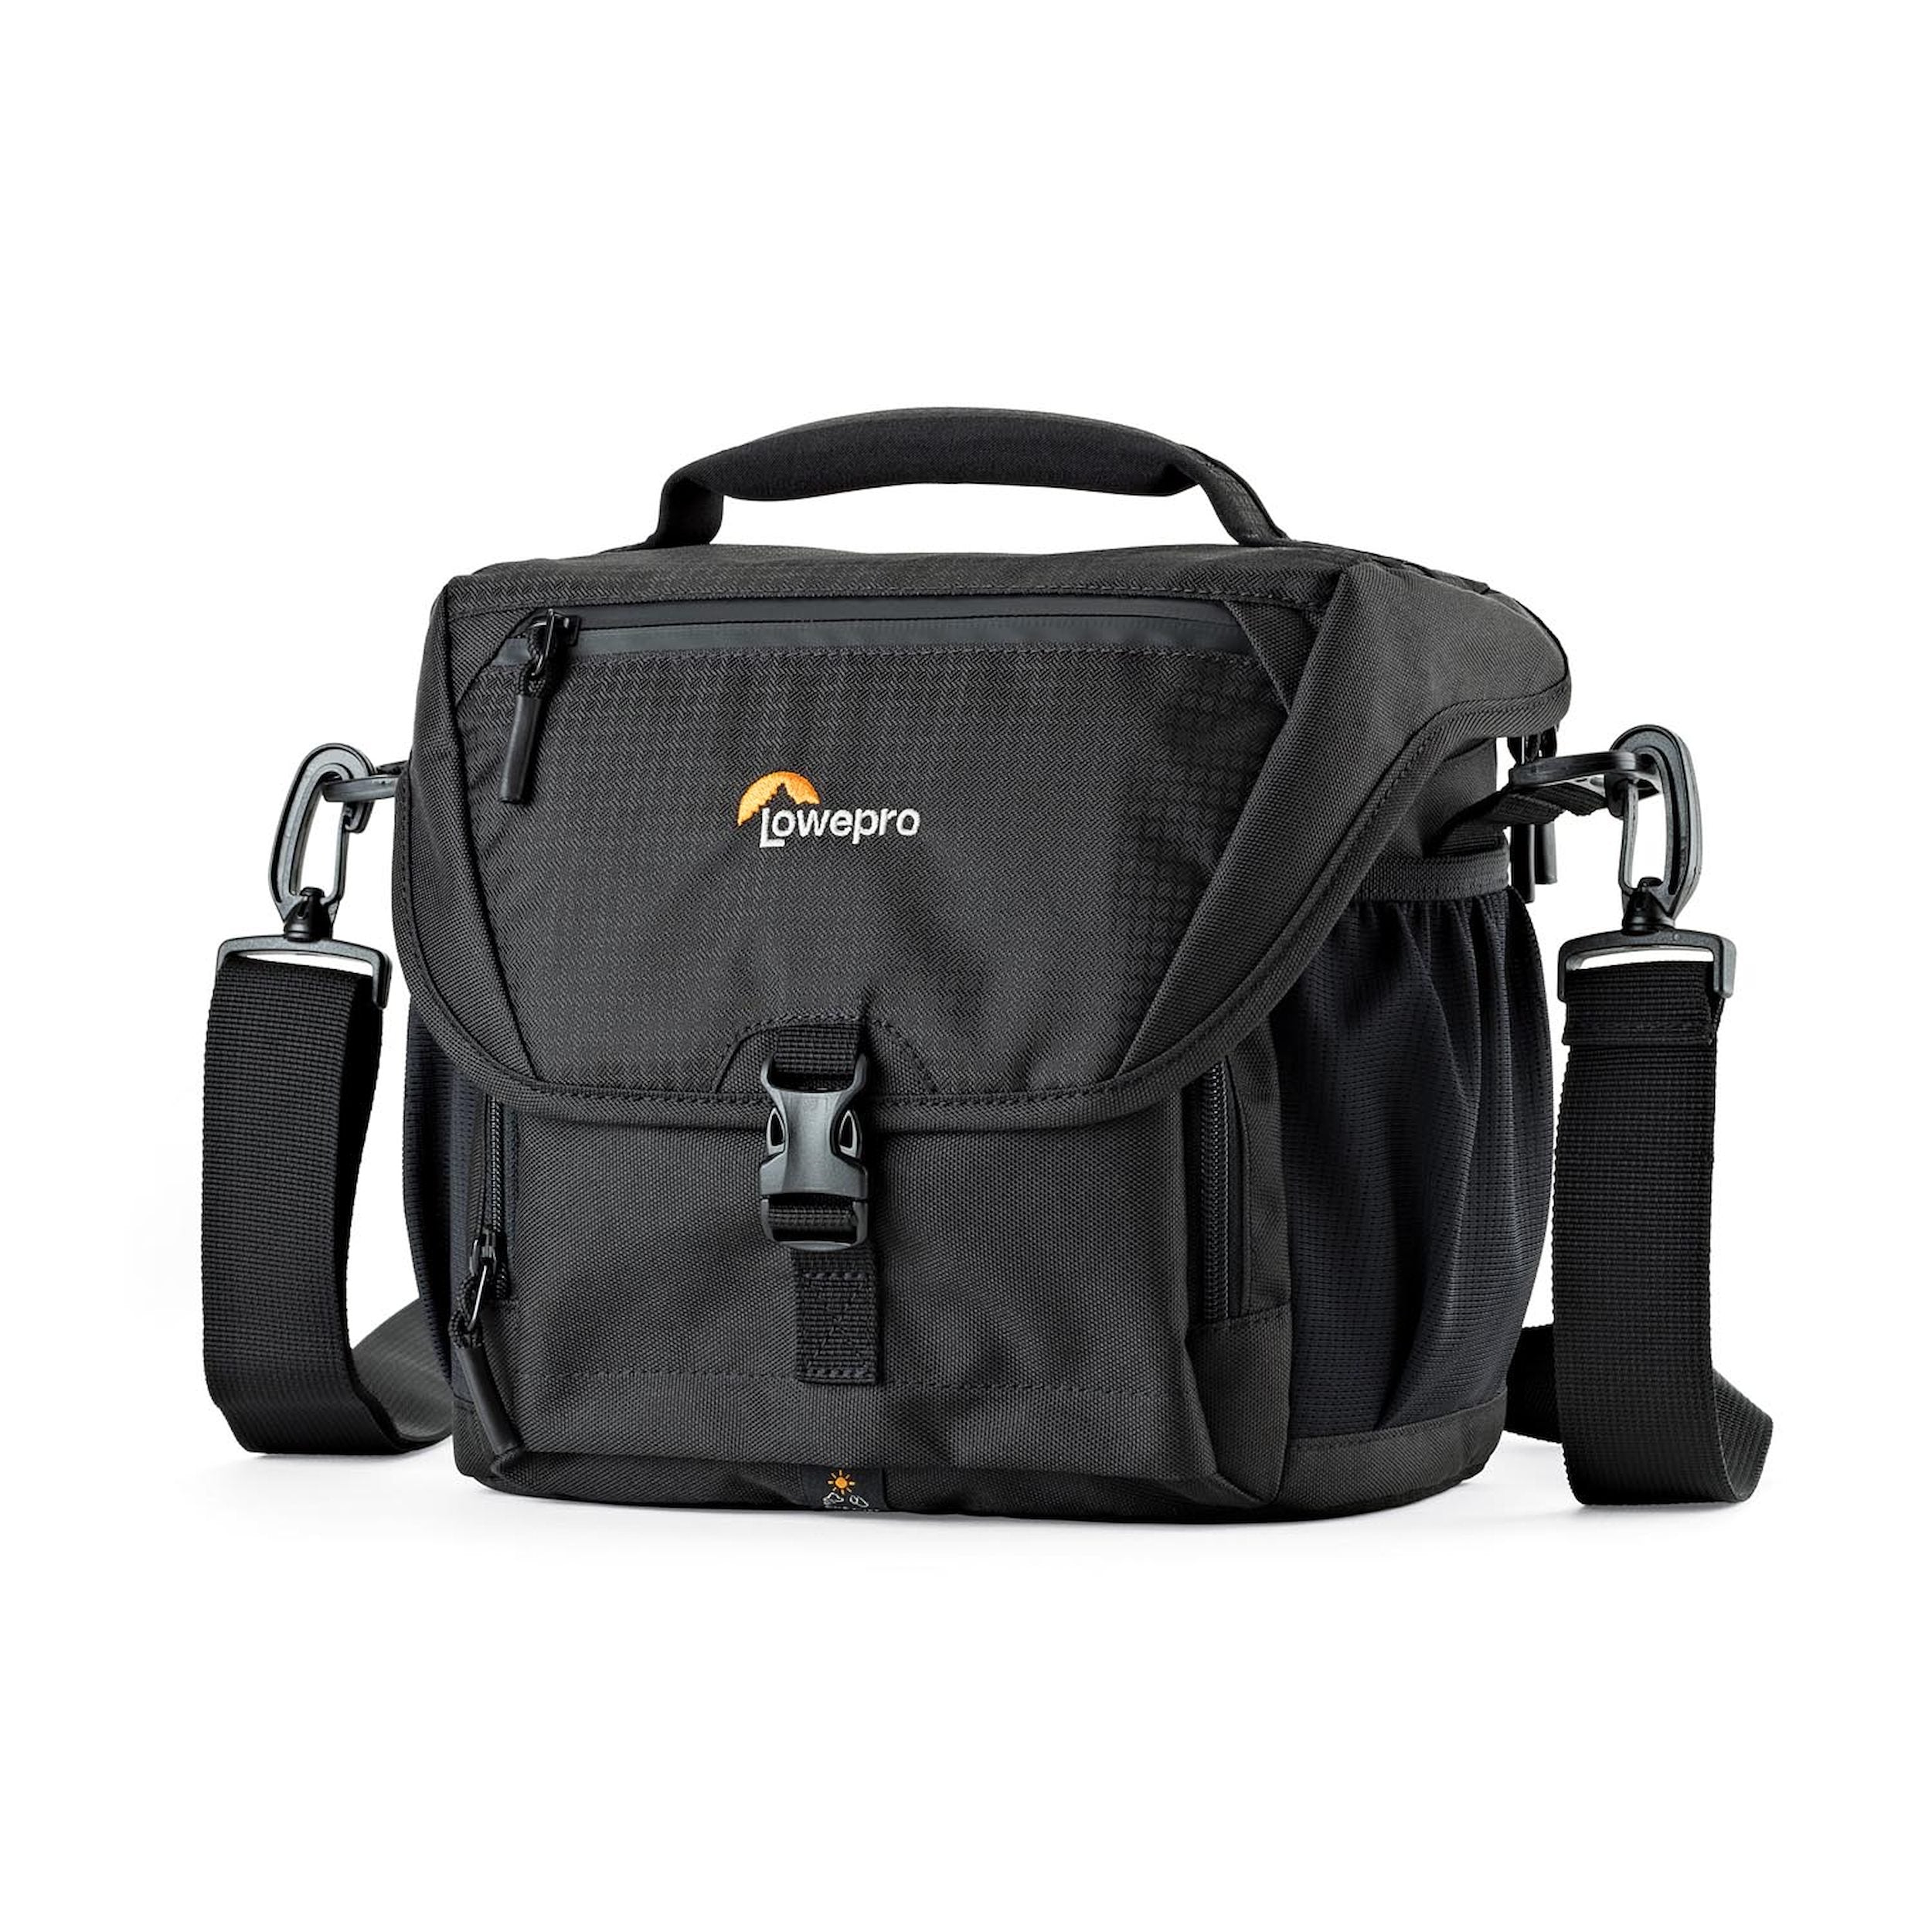 Lowepro Camera Bag Nova 170 AW II (Black)